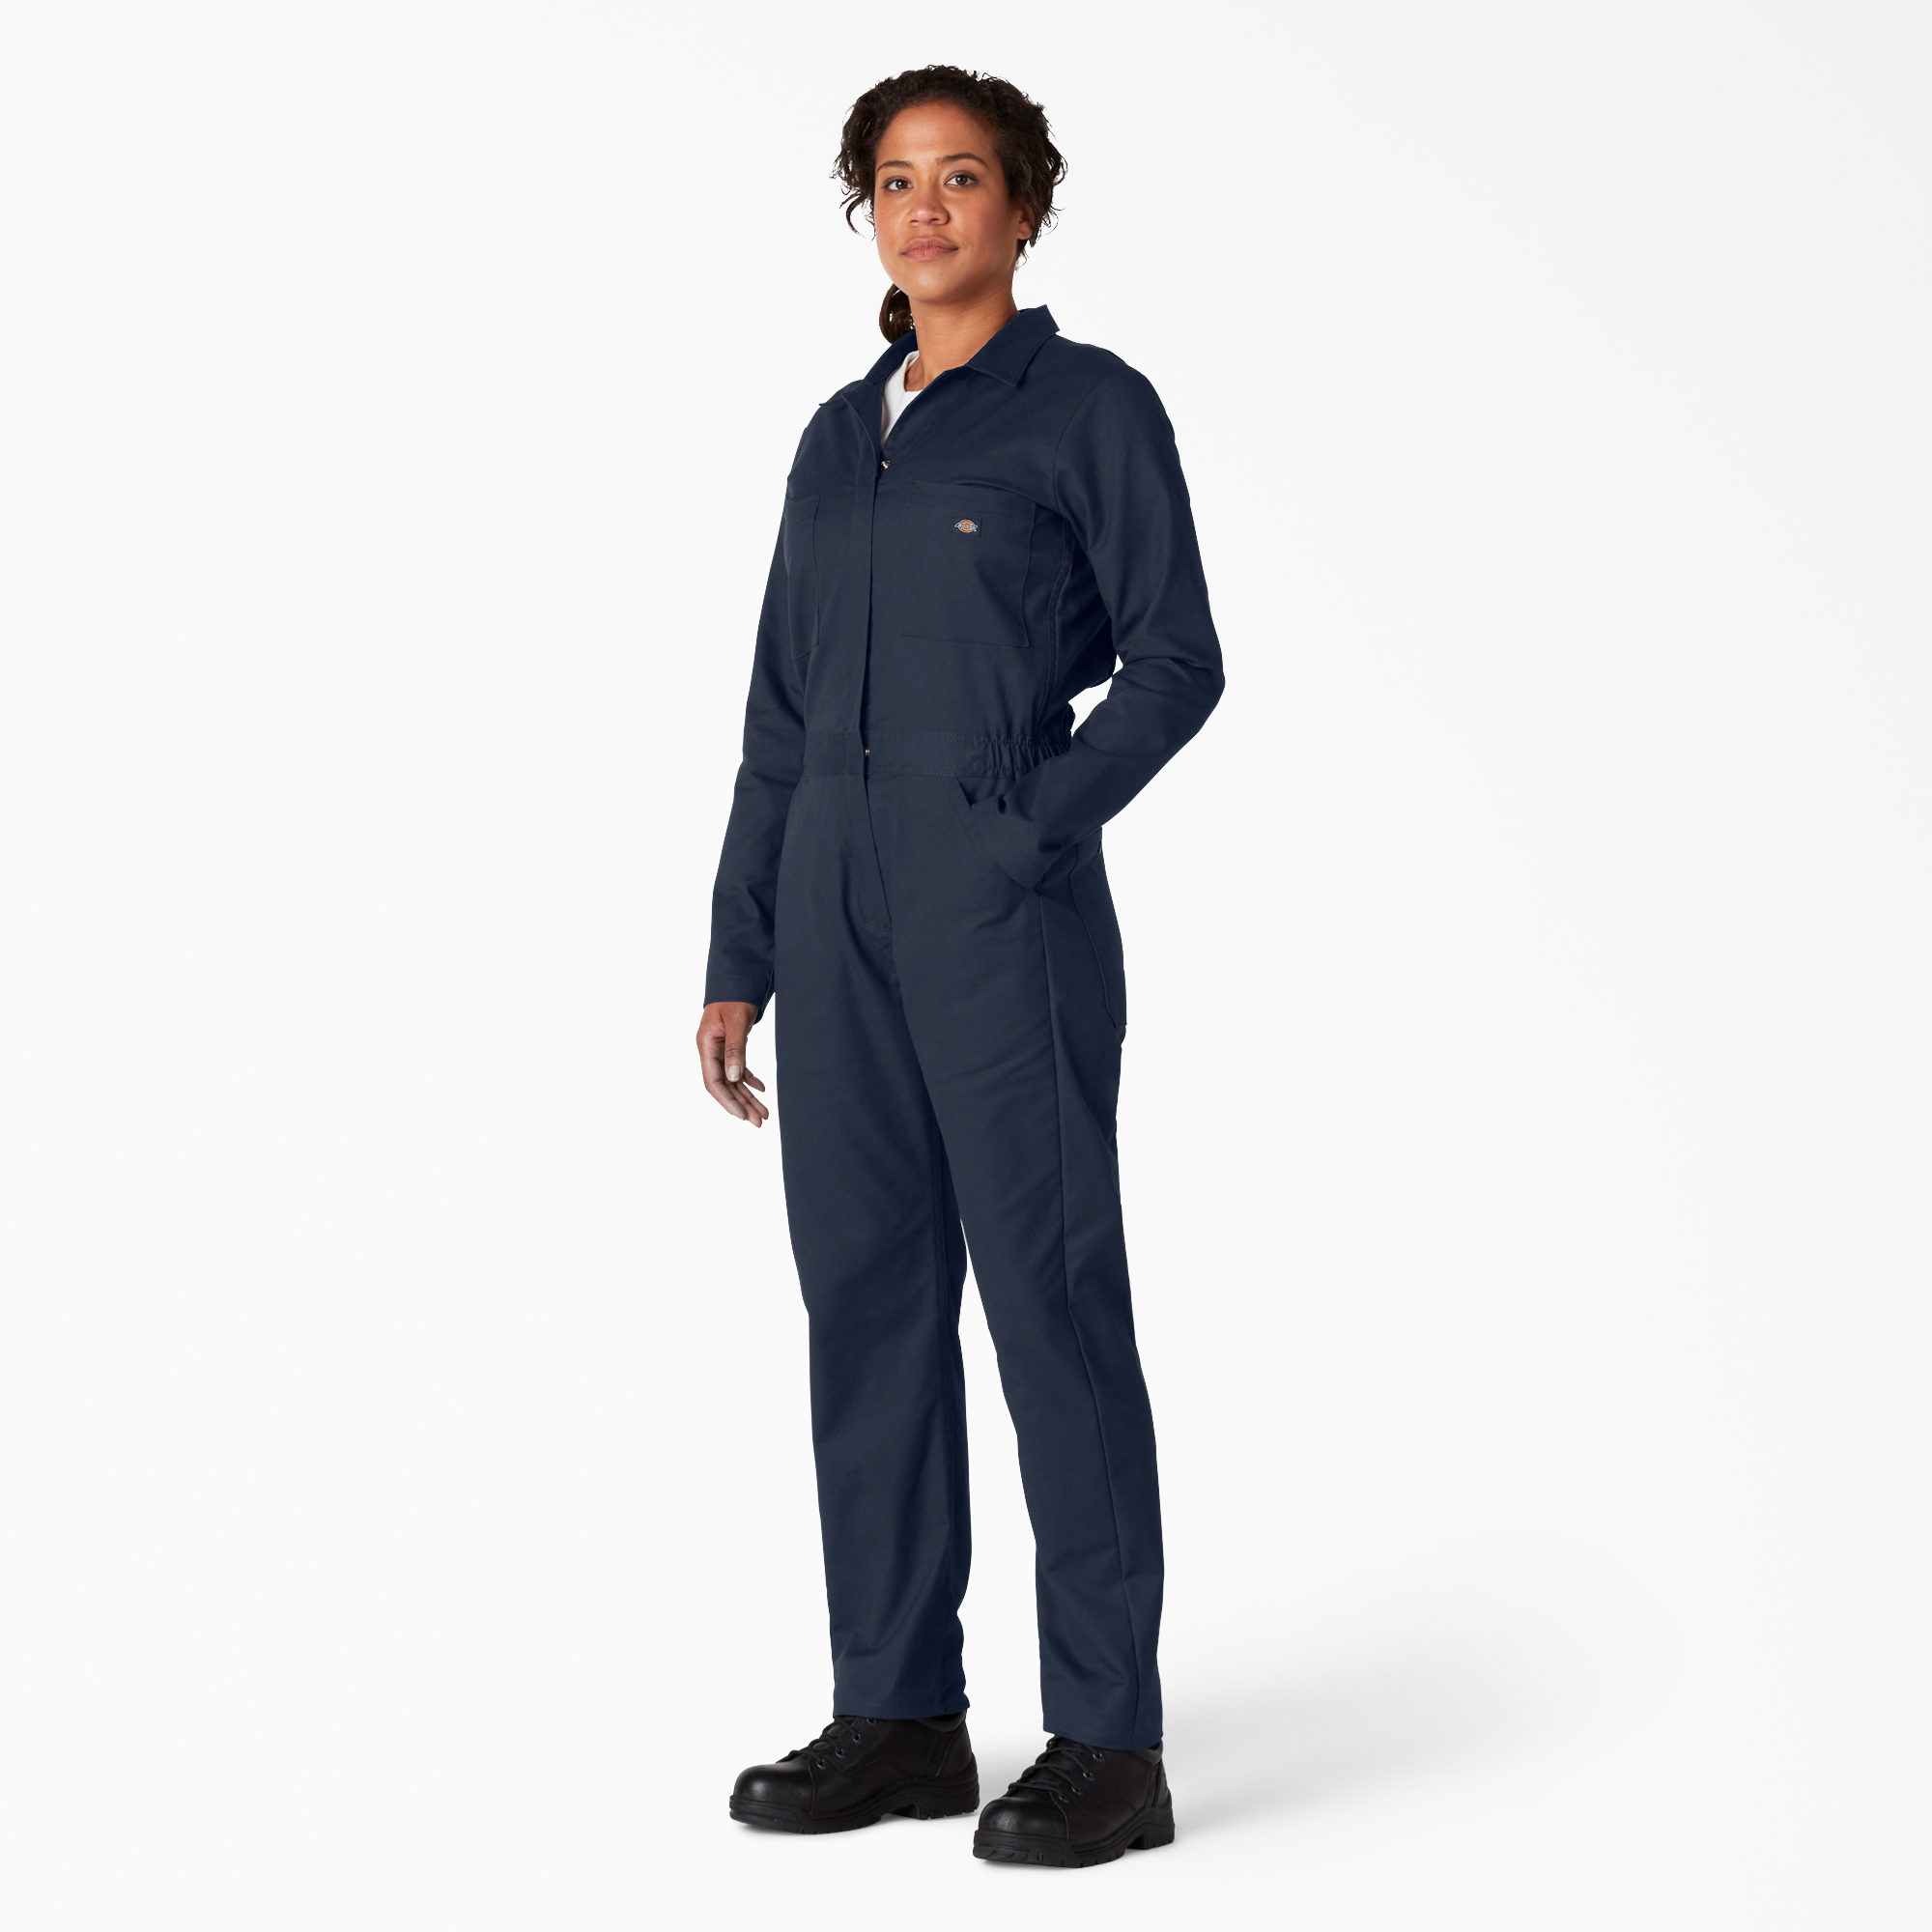 Women's FLEX Cooling Long Sleeve Coveralls - Dark Navy (DN)